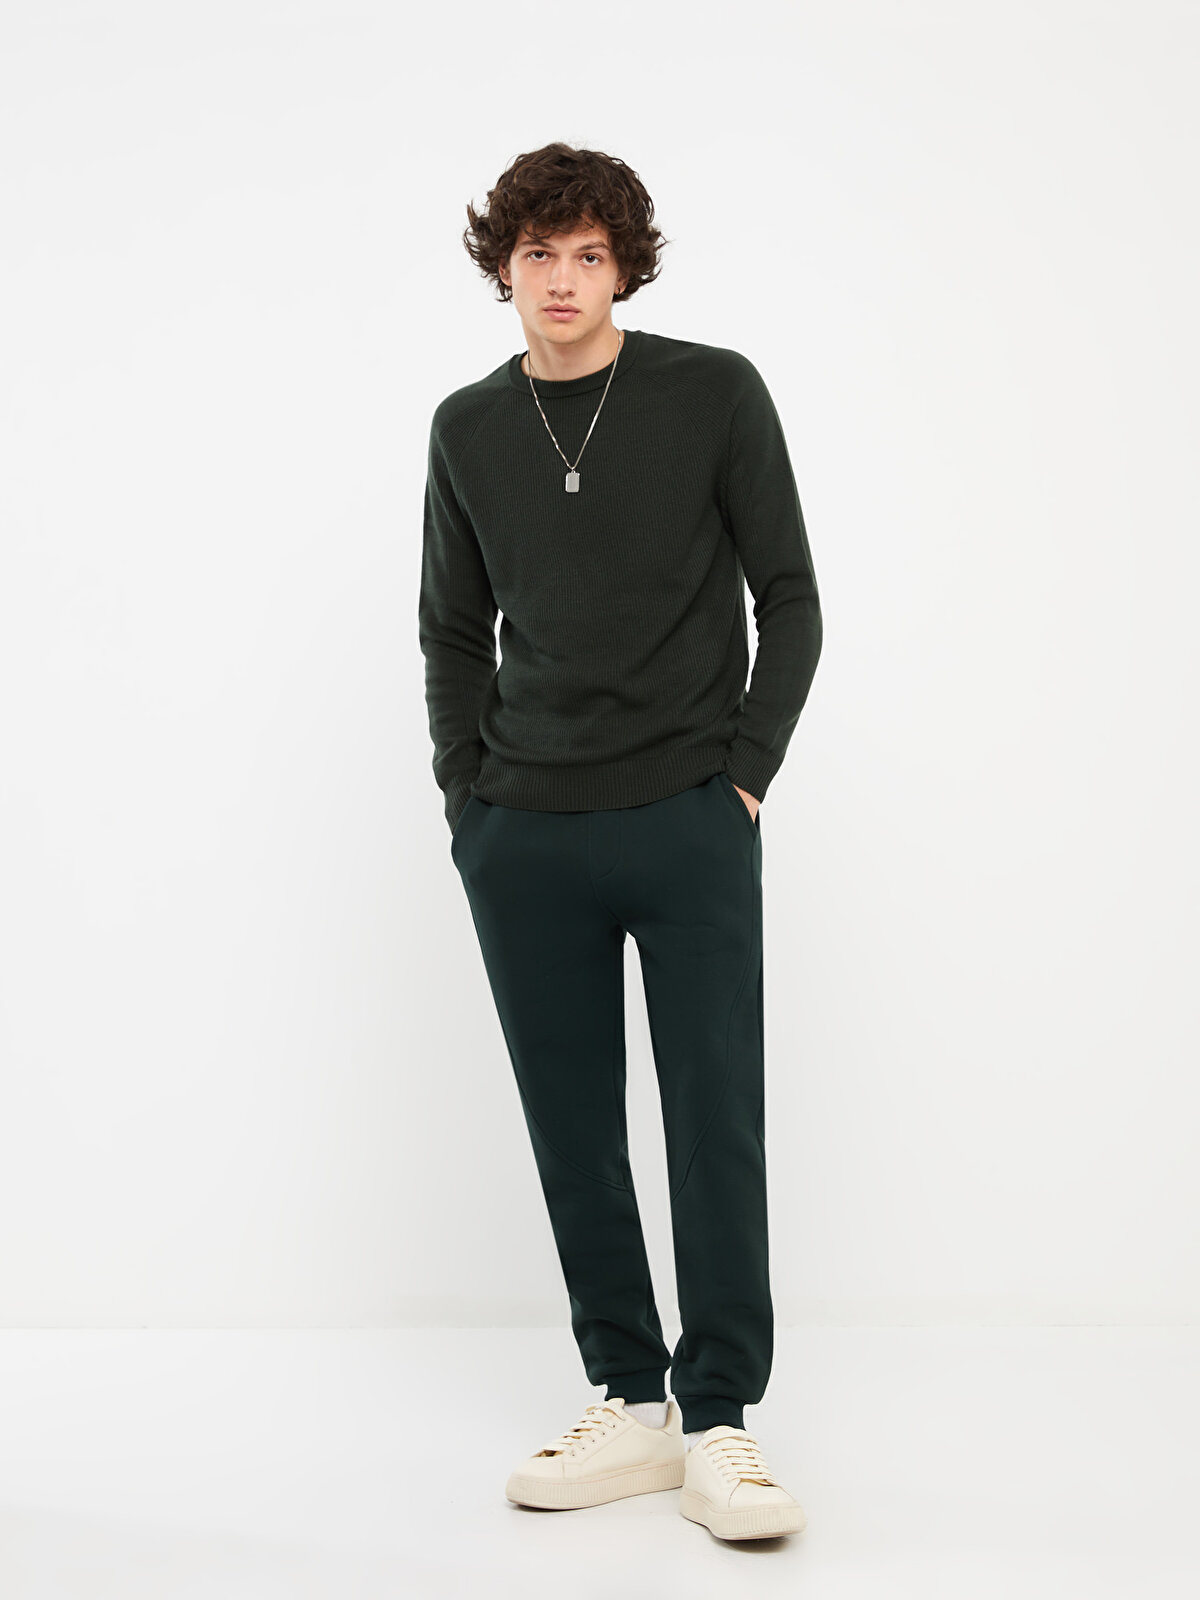 Fitz + Eddi Color Block Ivory Pullover Sweater Size M - 72% off